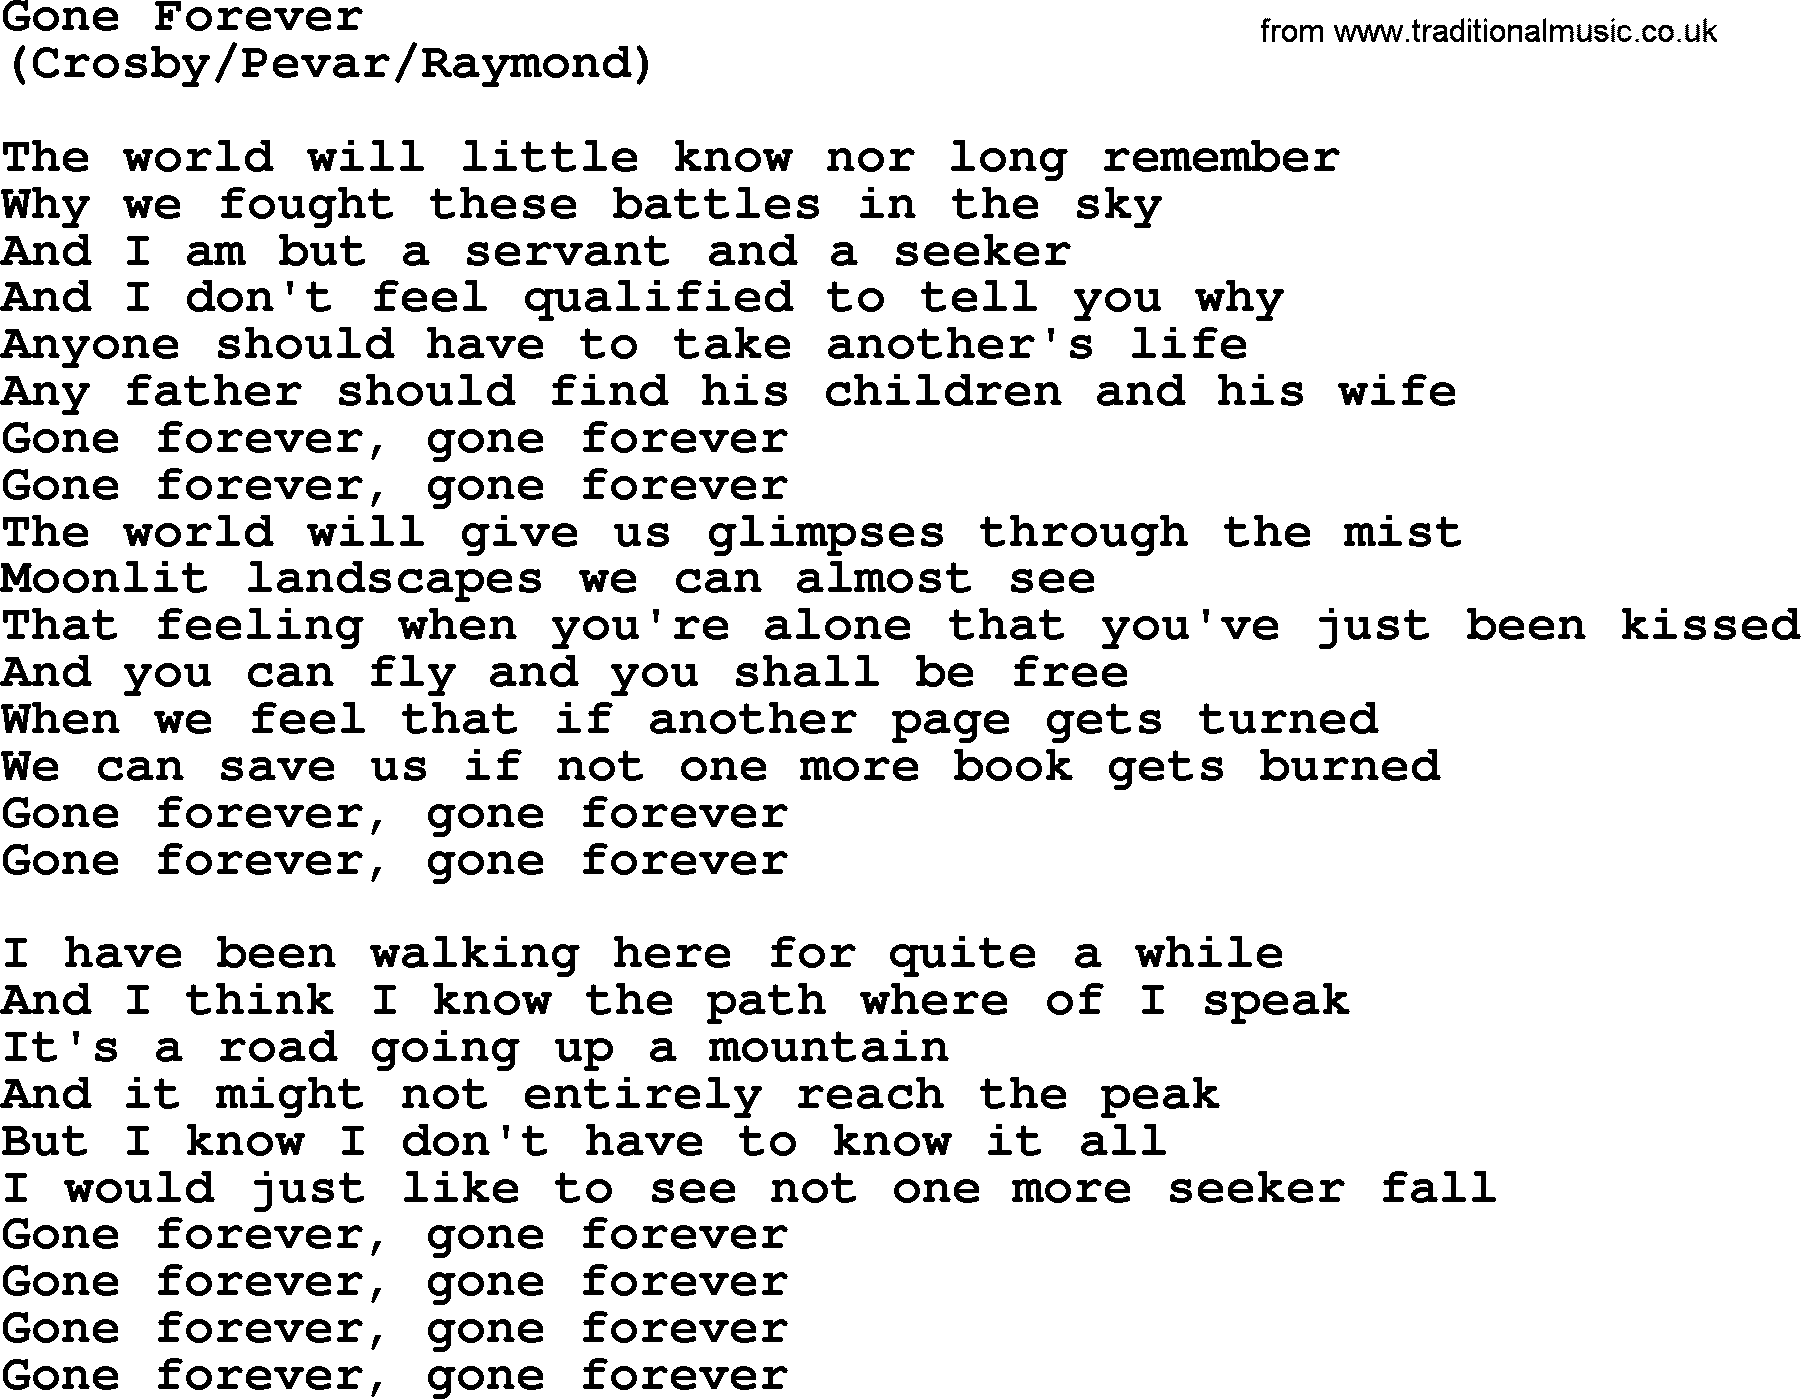 The Byrds song Gone Forever, lyrics